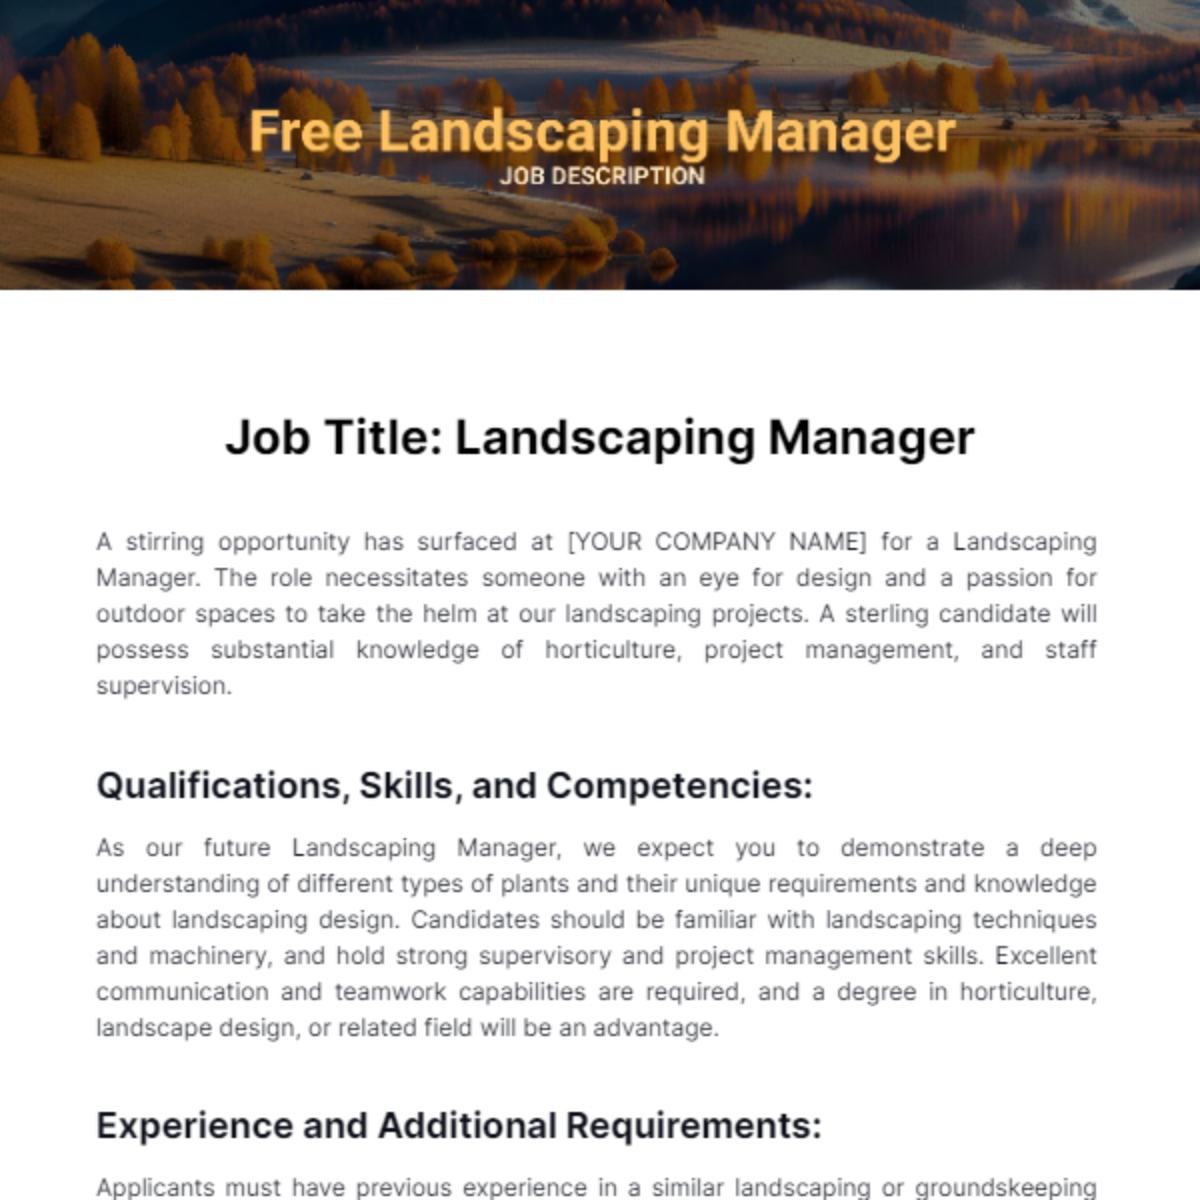 Free Landscaping Manager Job Description Template